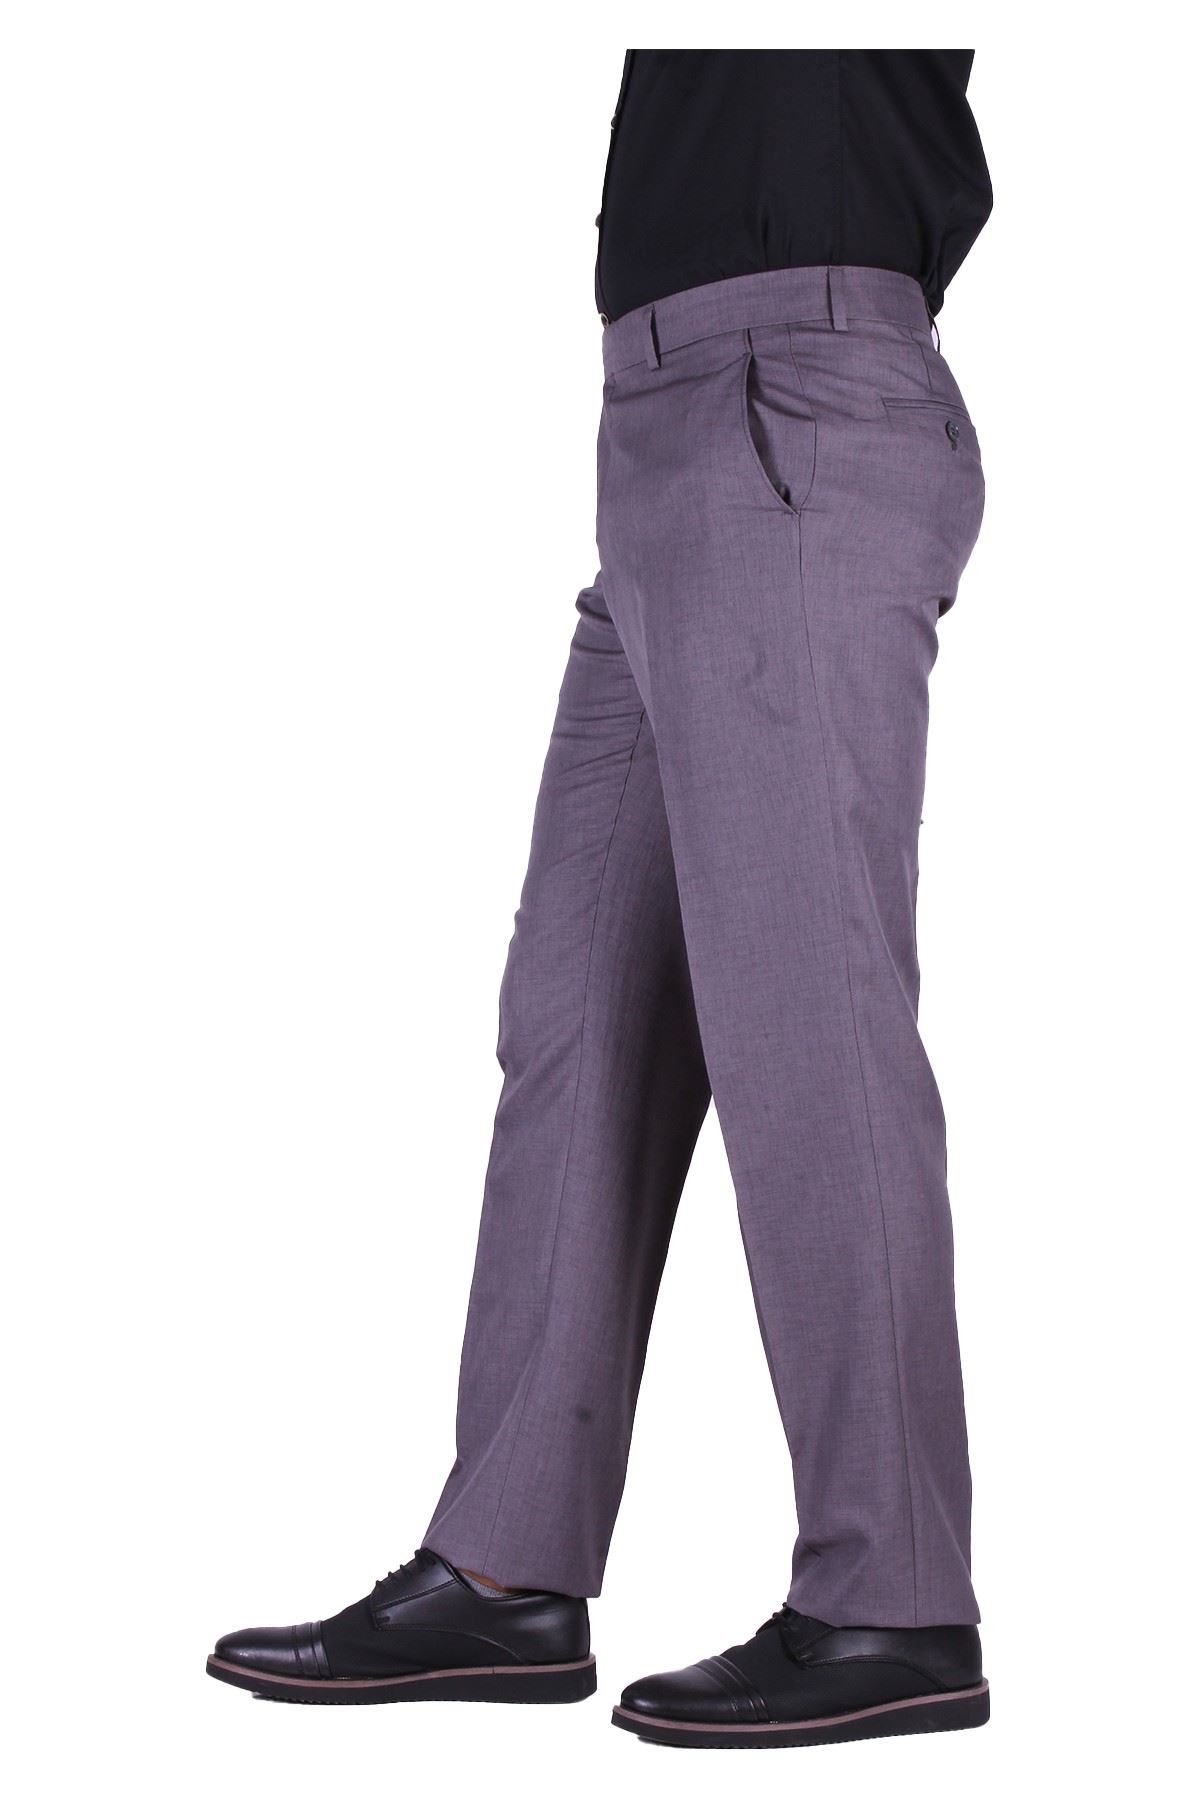 Giyinsen Erkek Gri Klasik Pantolon - 23KL71M57001